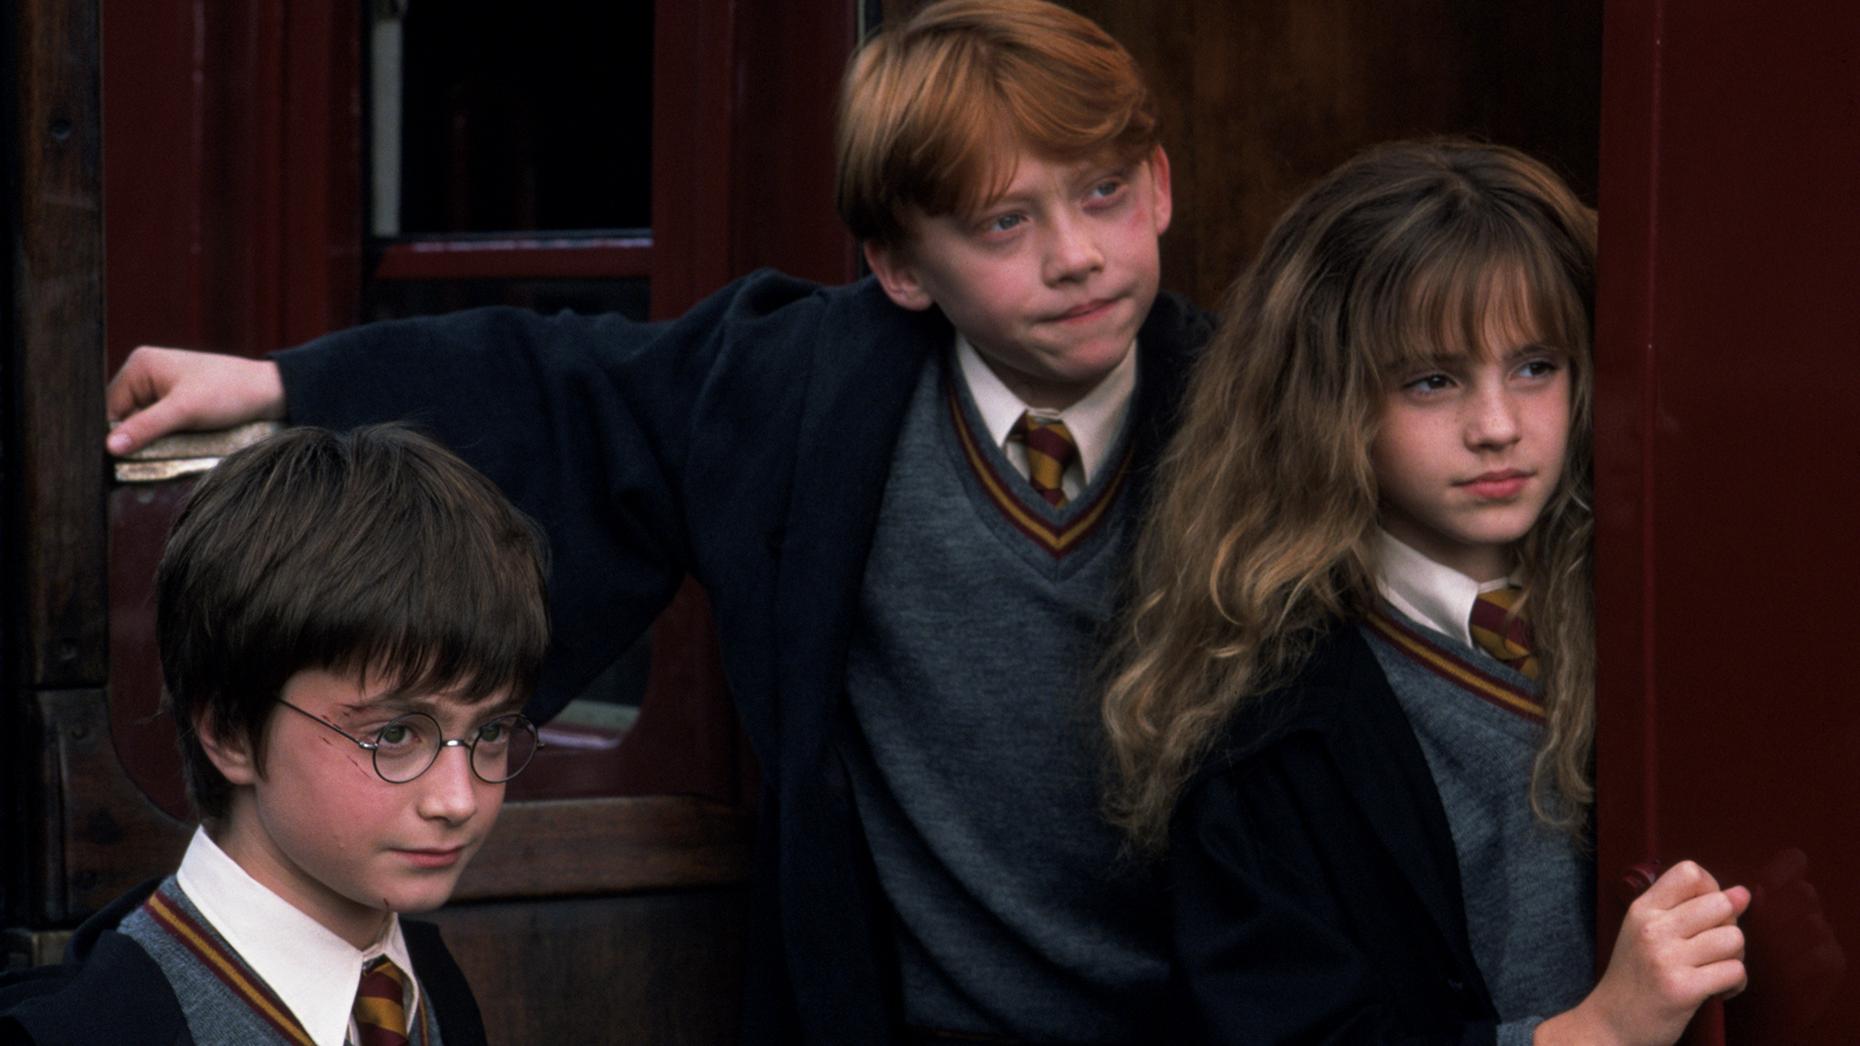 Chris Columbus down to make "Cursed Child" film with original Harry Potter trio